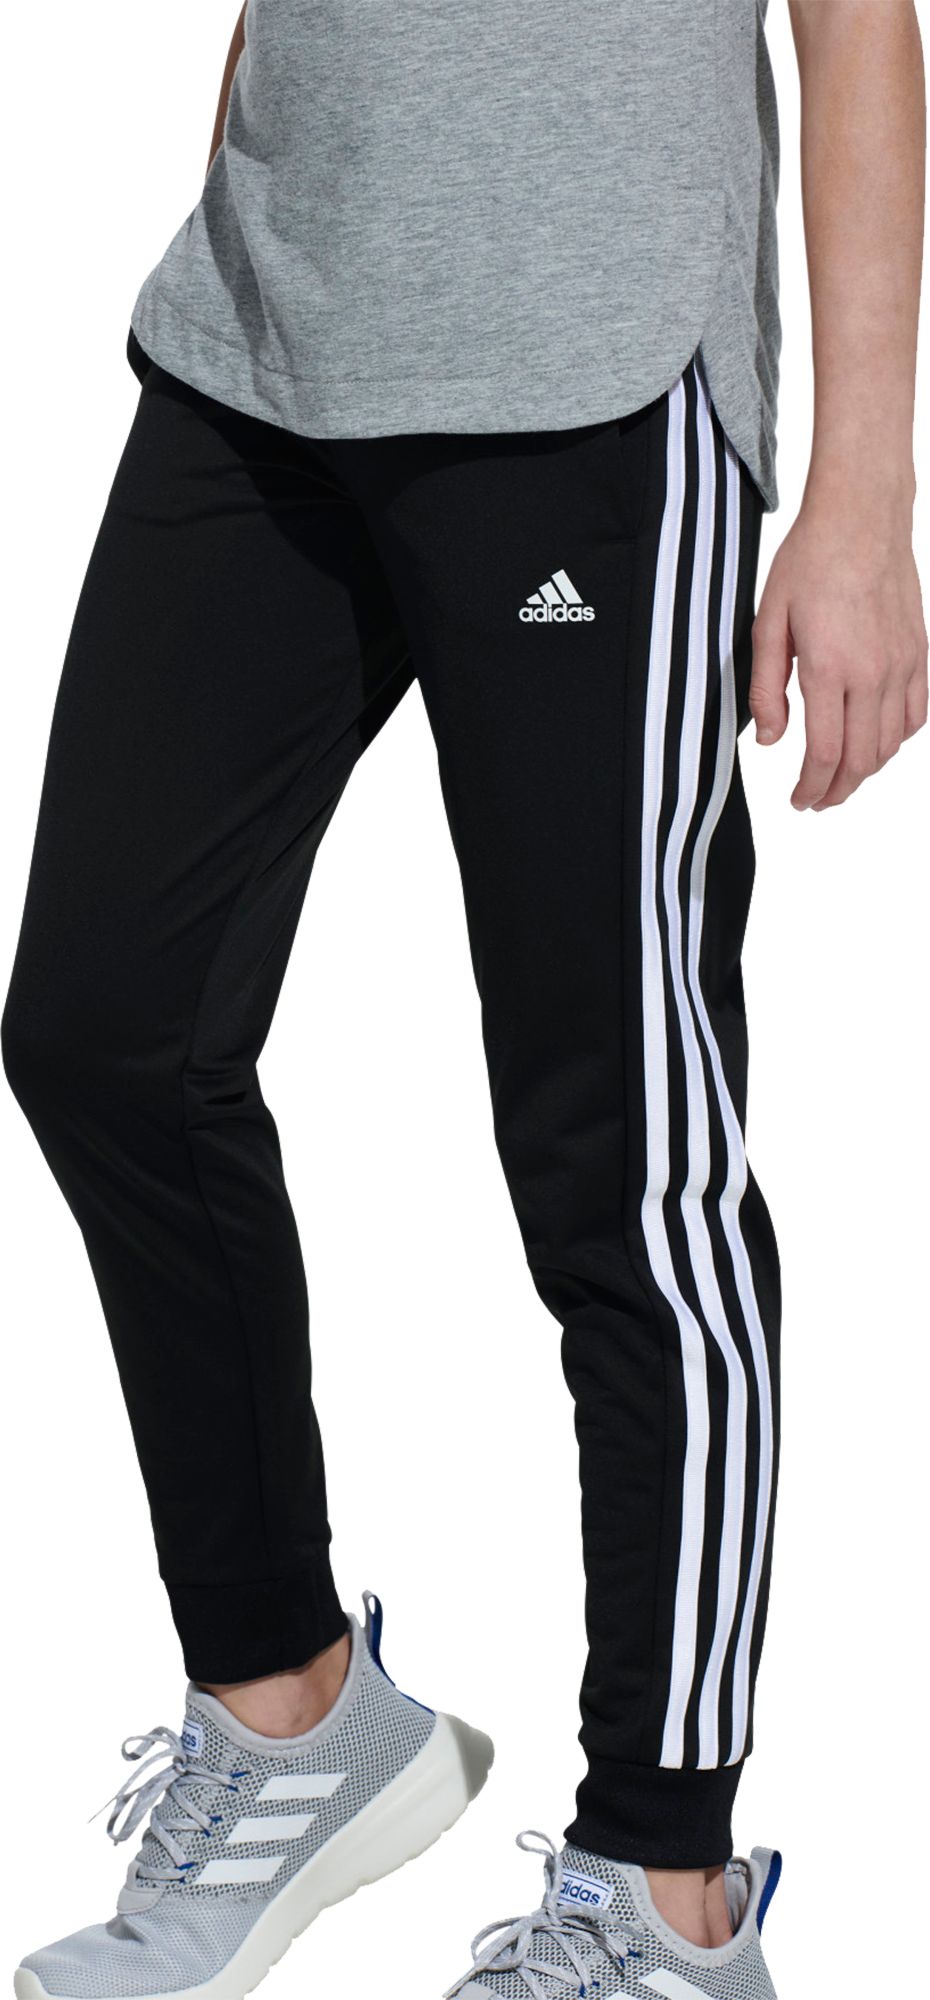 adidas jogging pants black